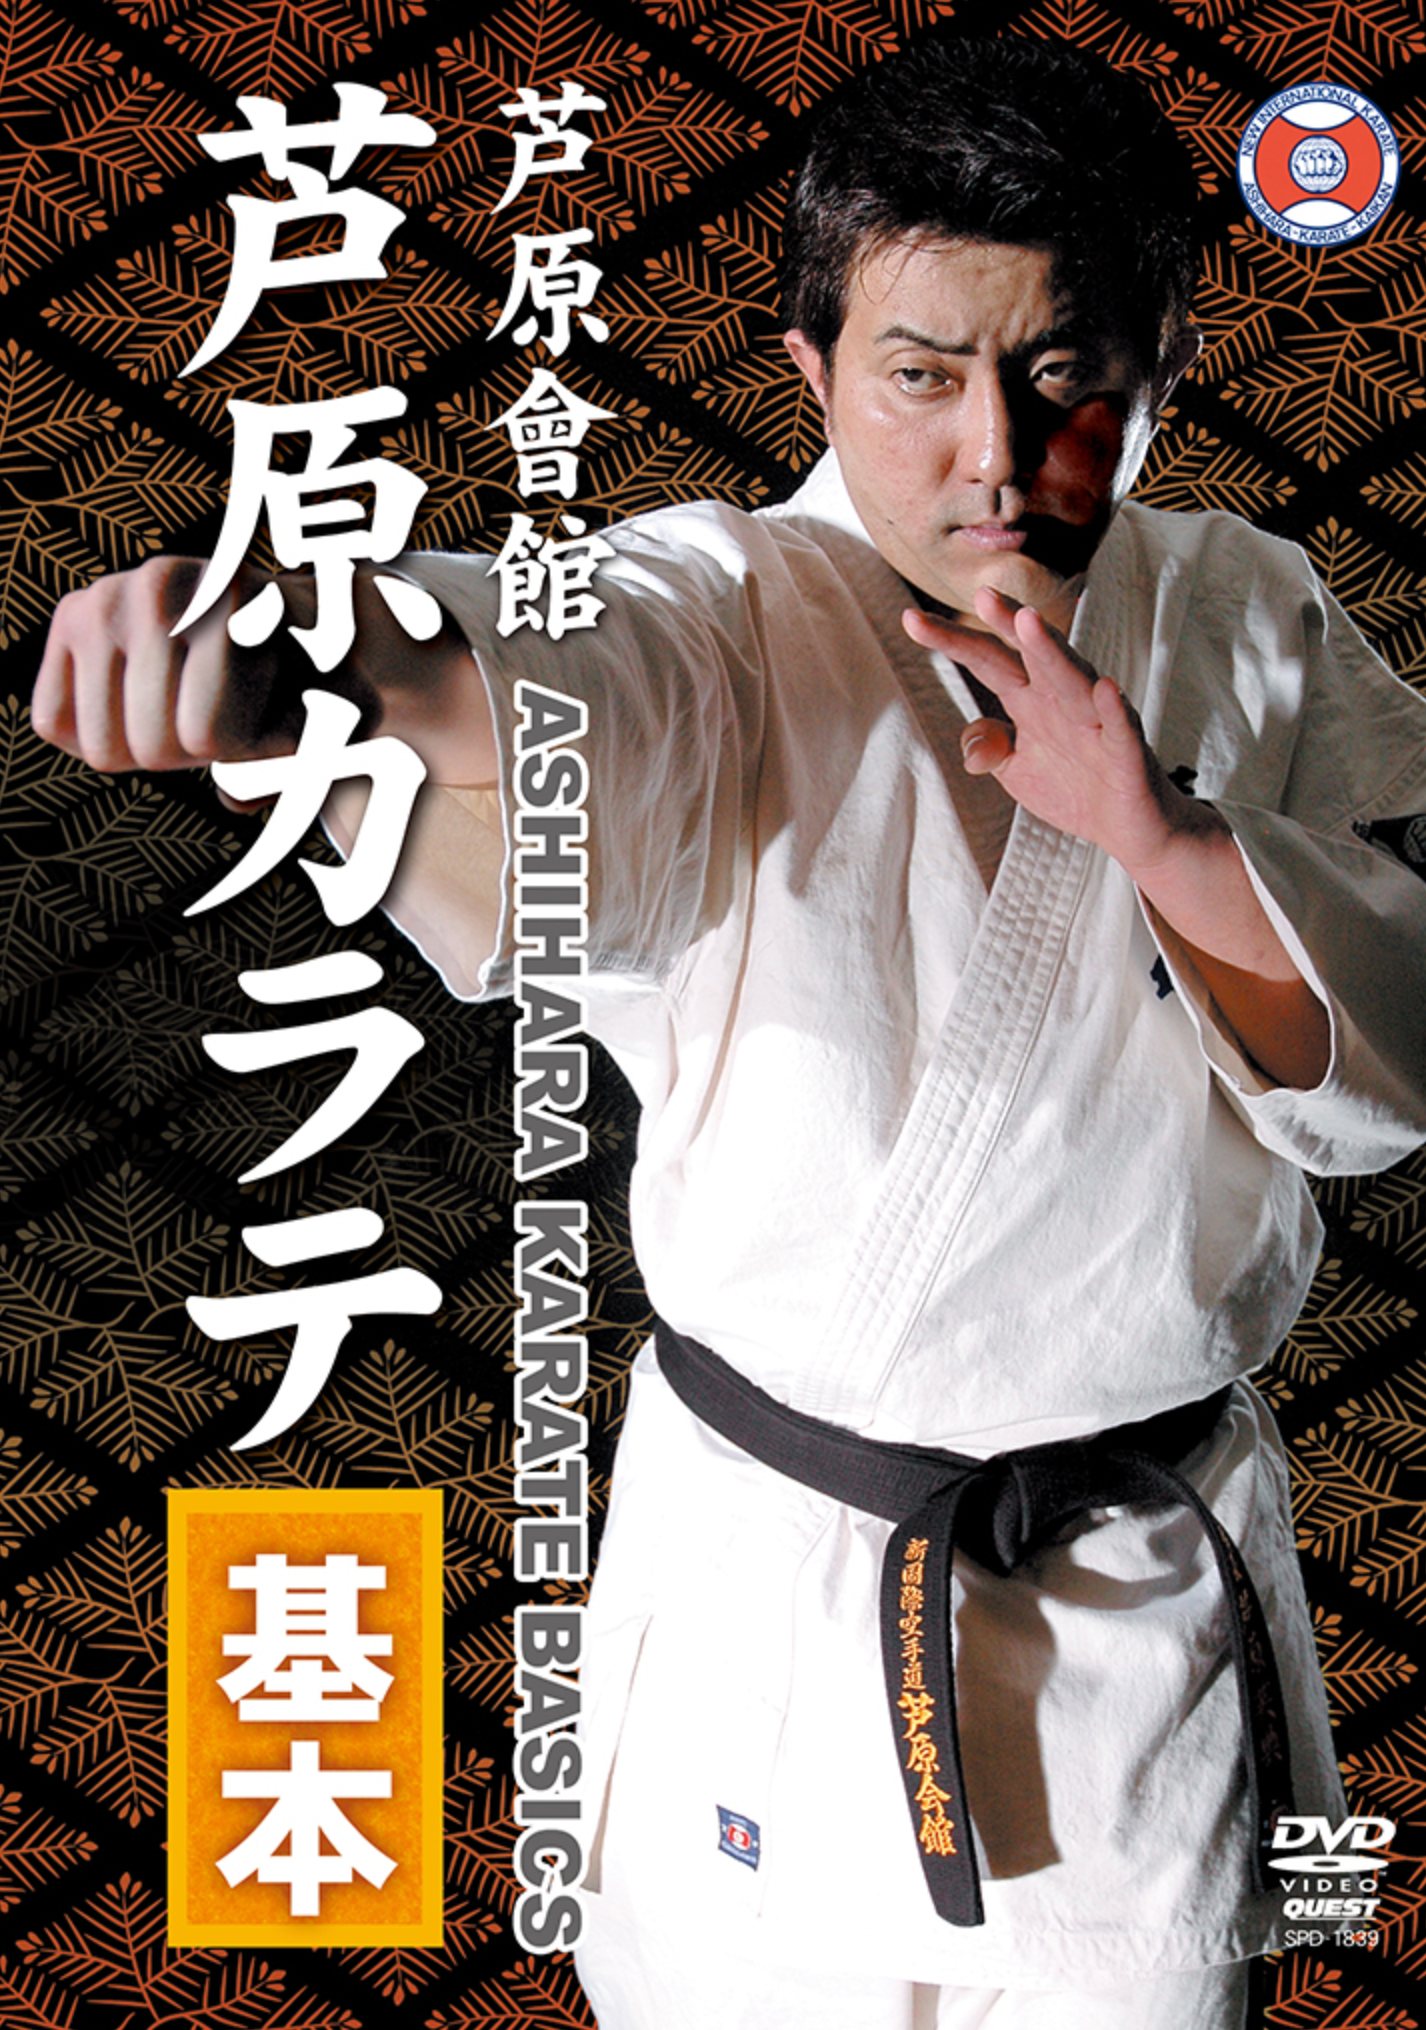 Ashihara Karate Basics DVD by Hidenori Ashihara - Budovideos Inc